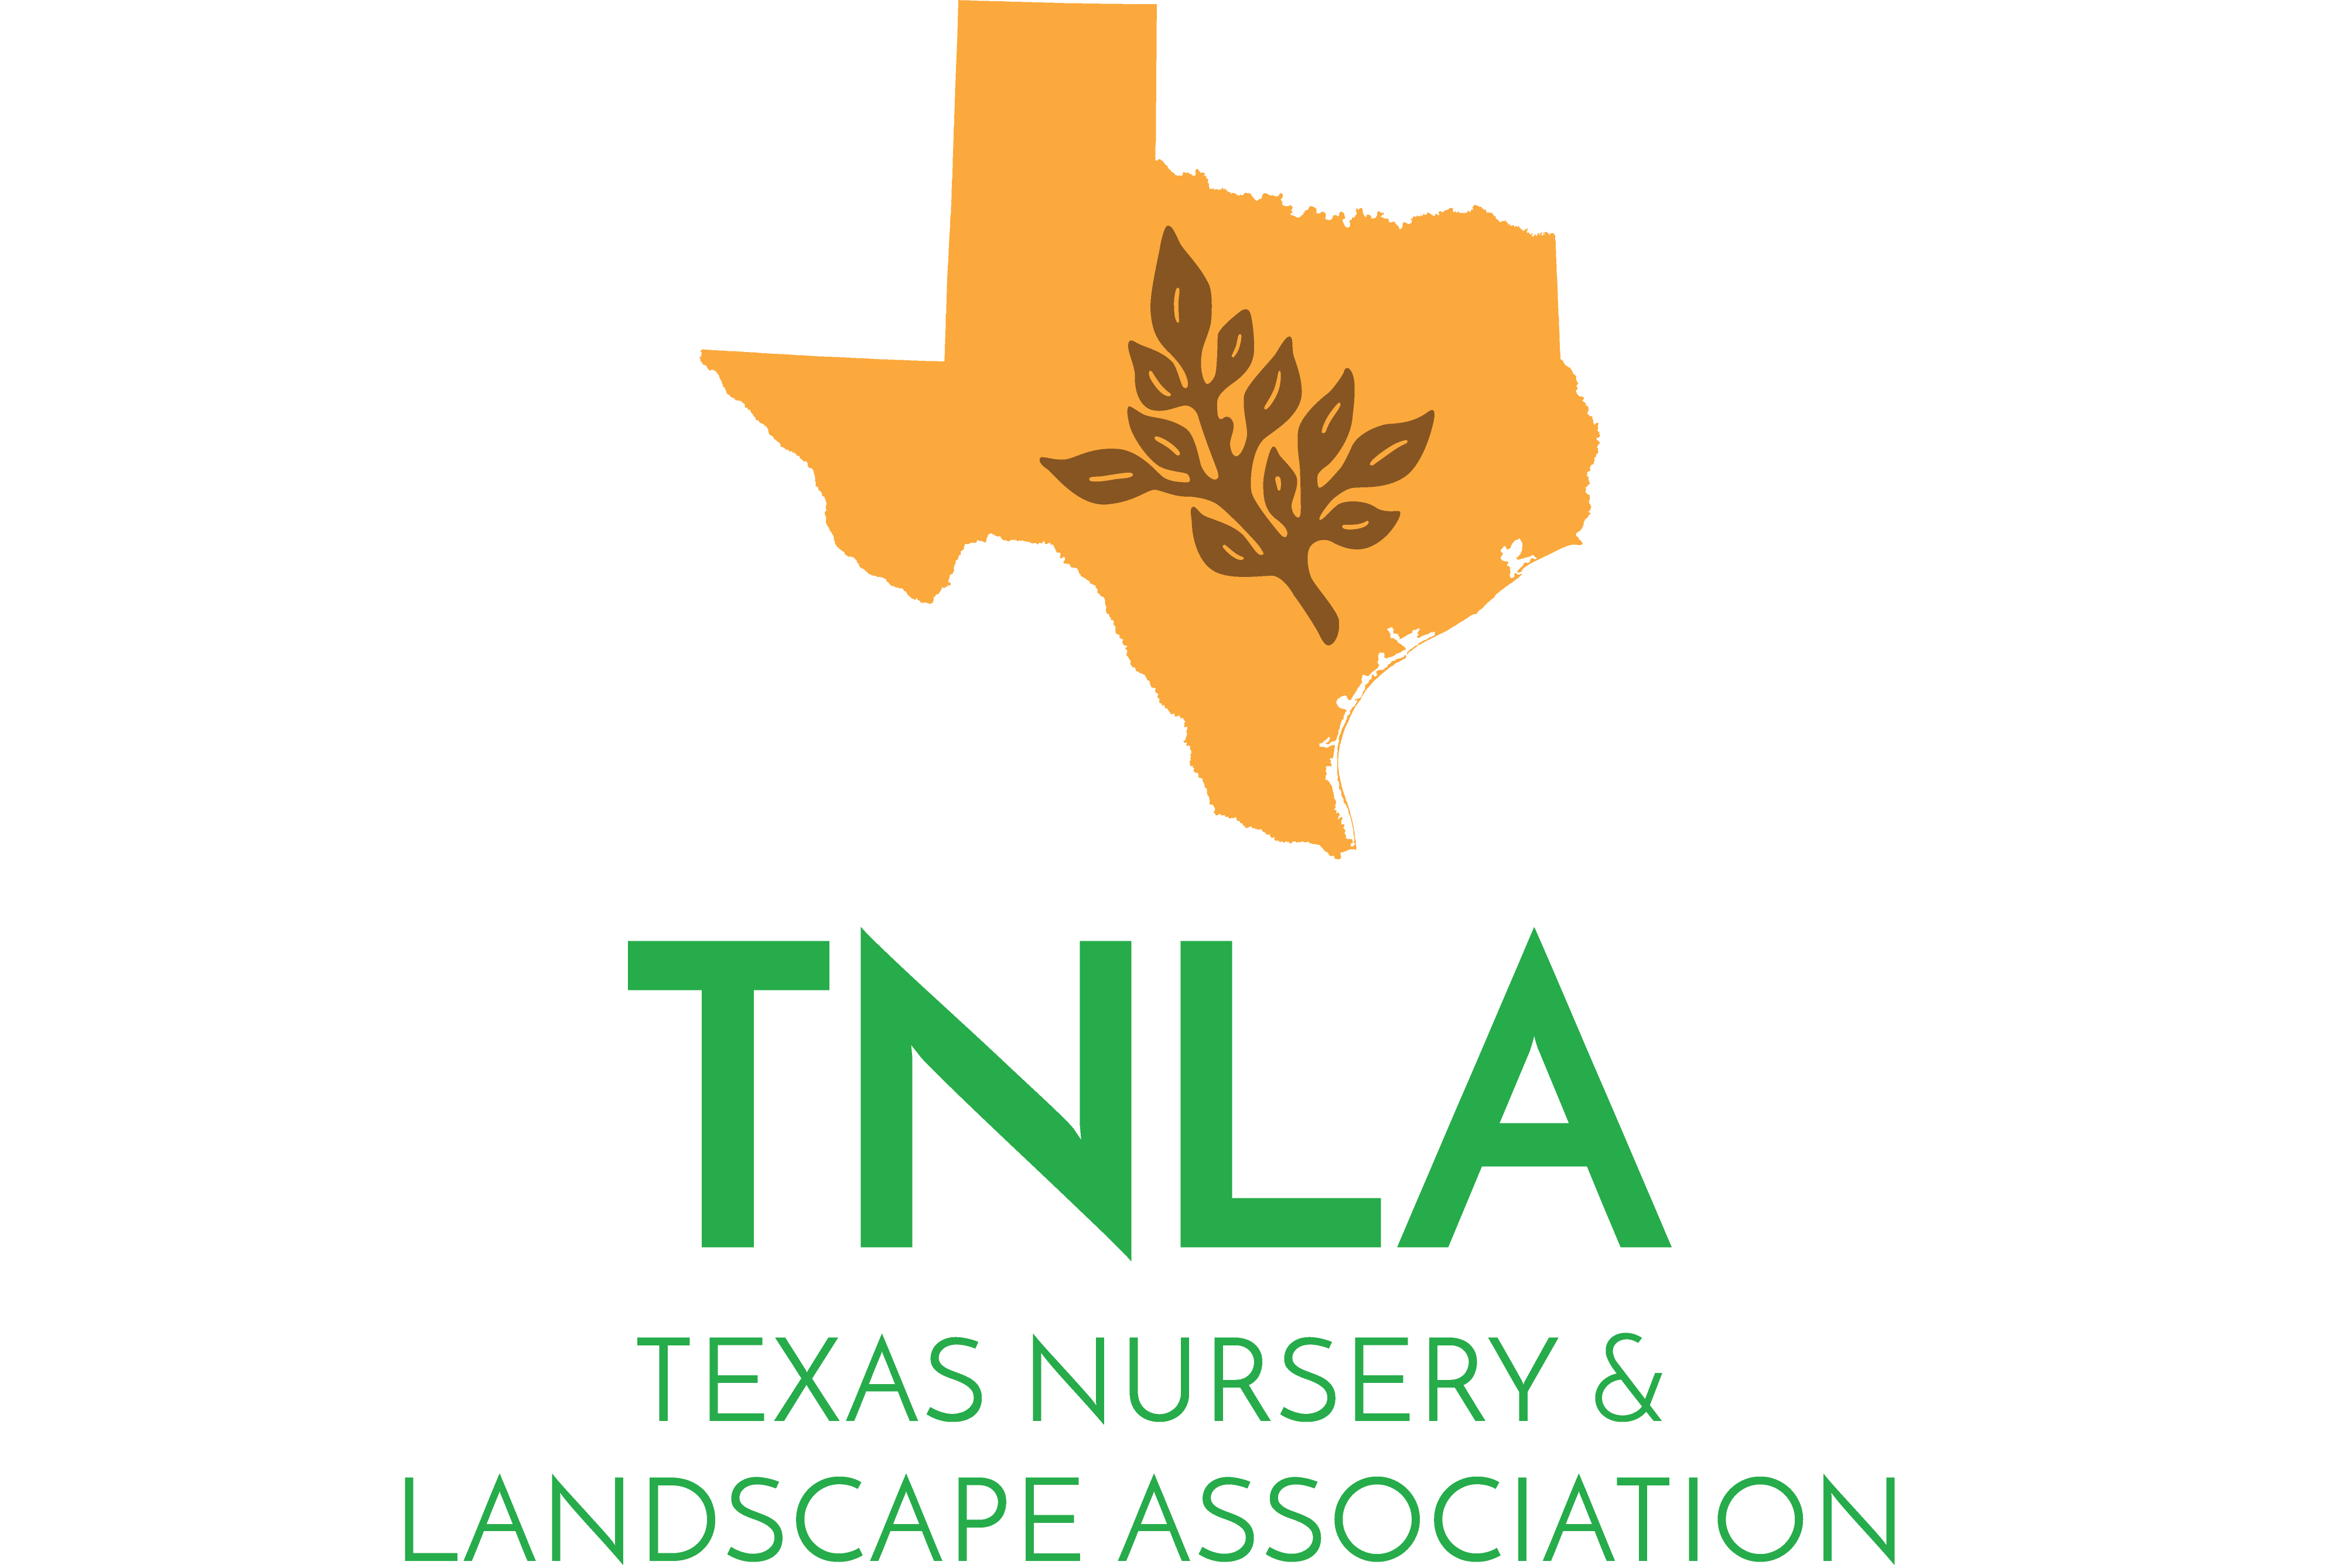 TNLA Texas Nursery & Landscape Association